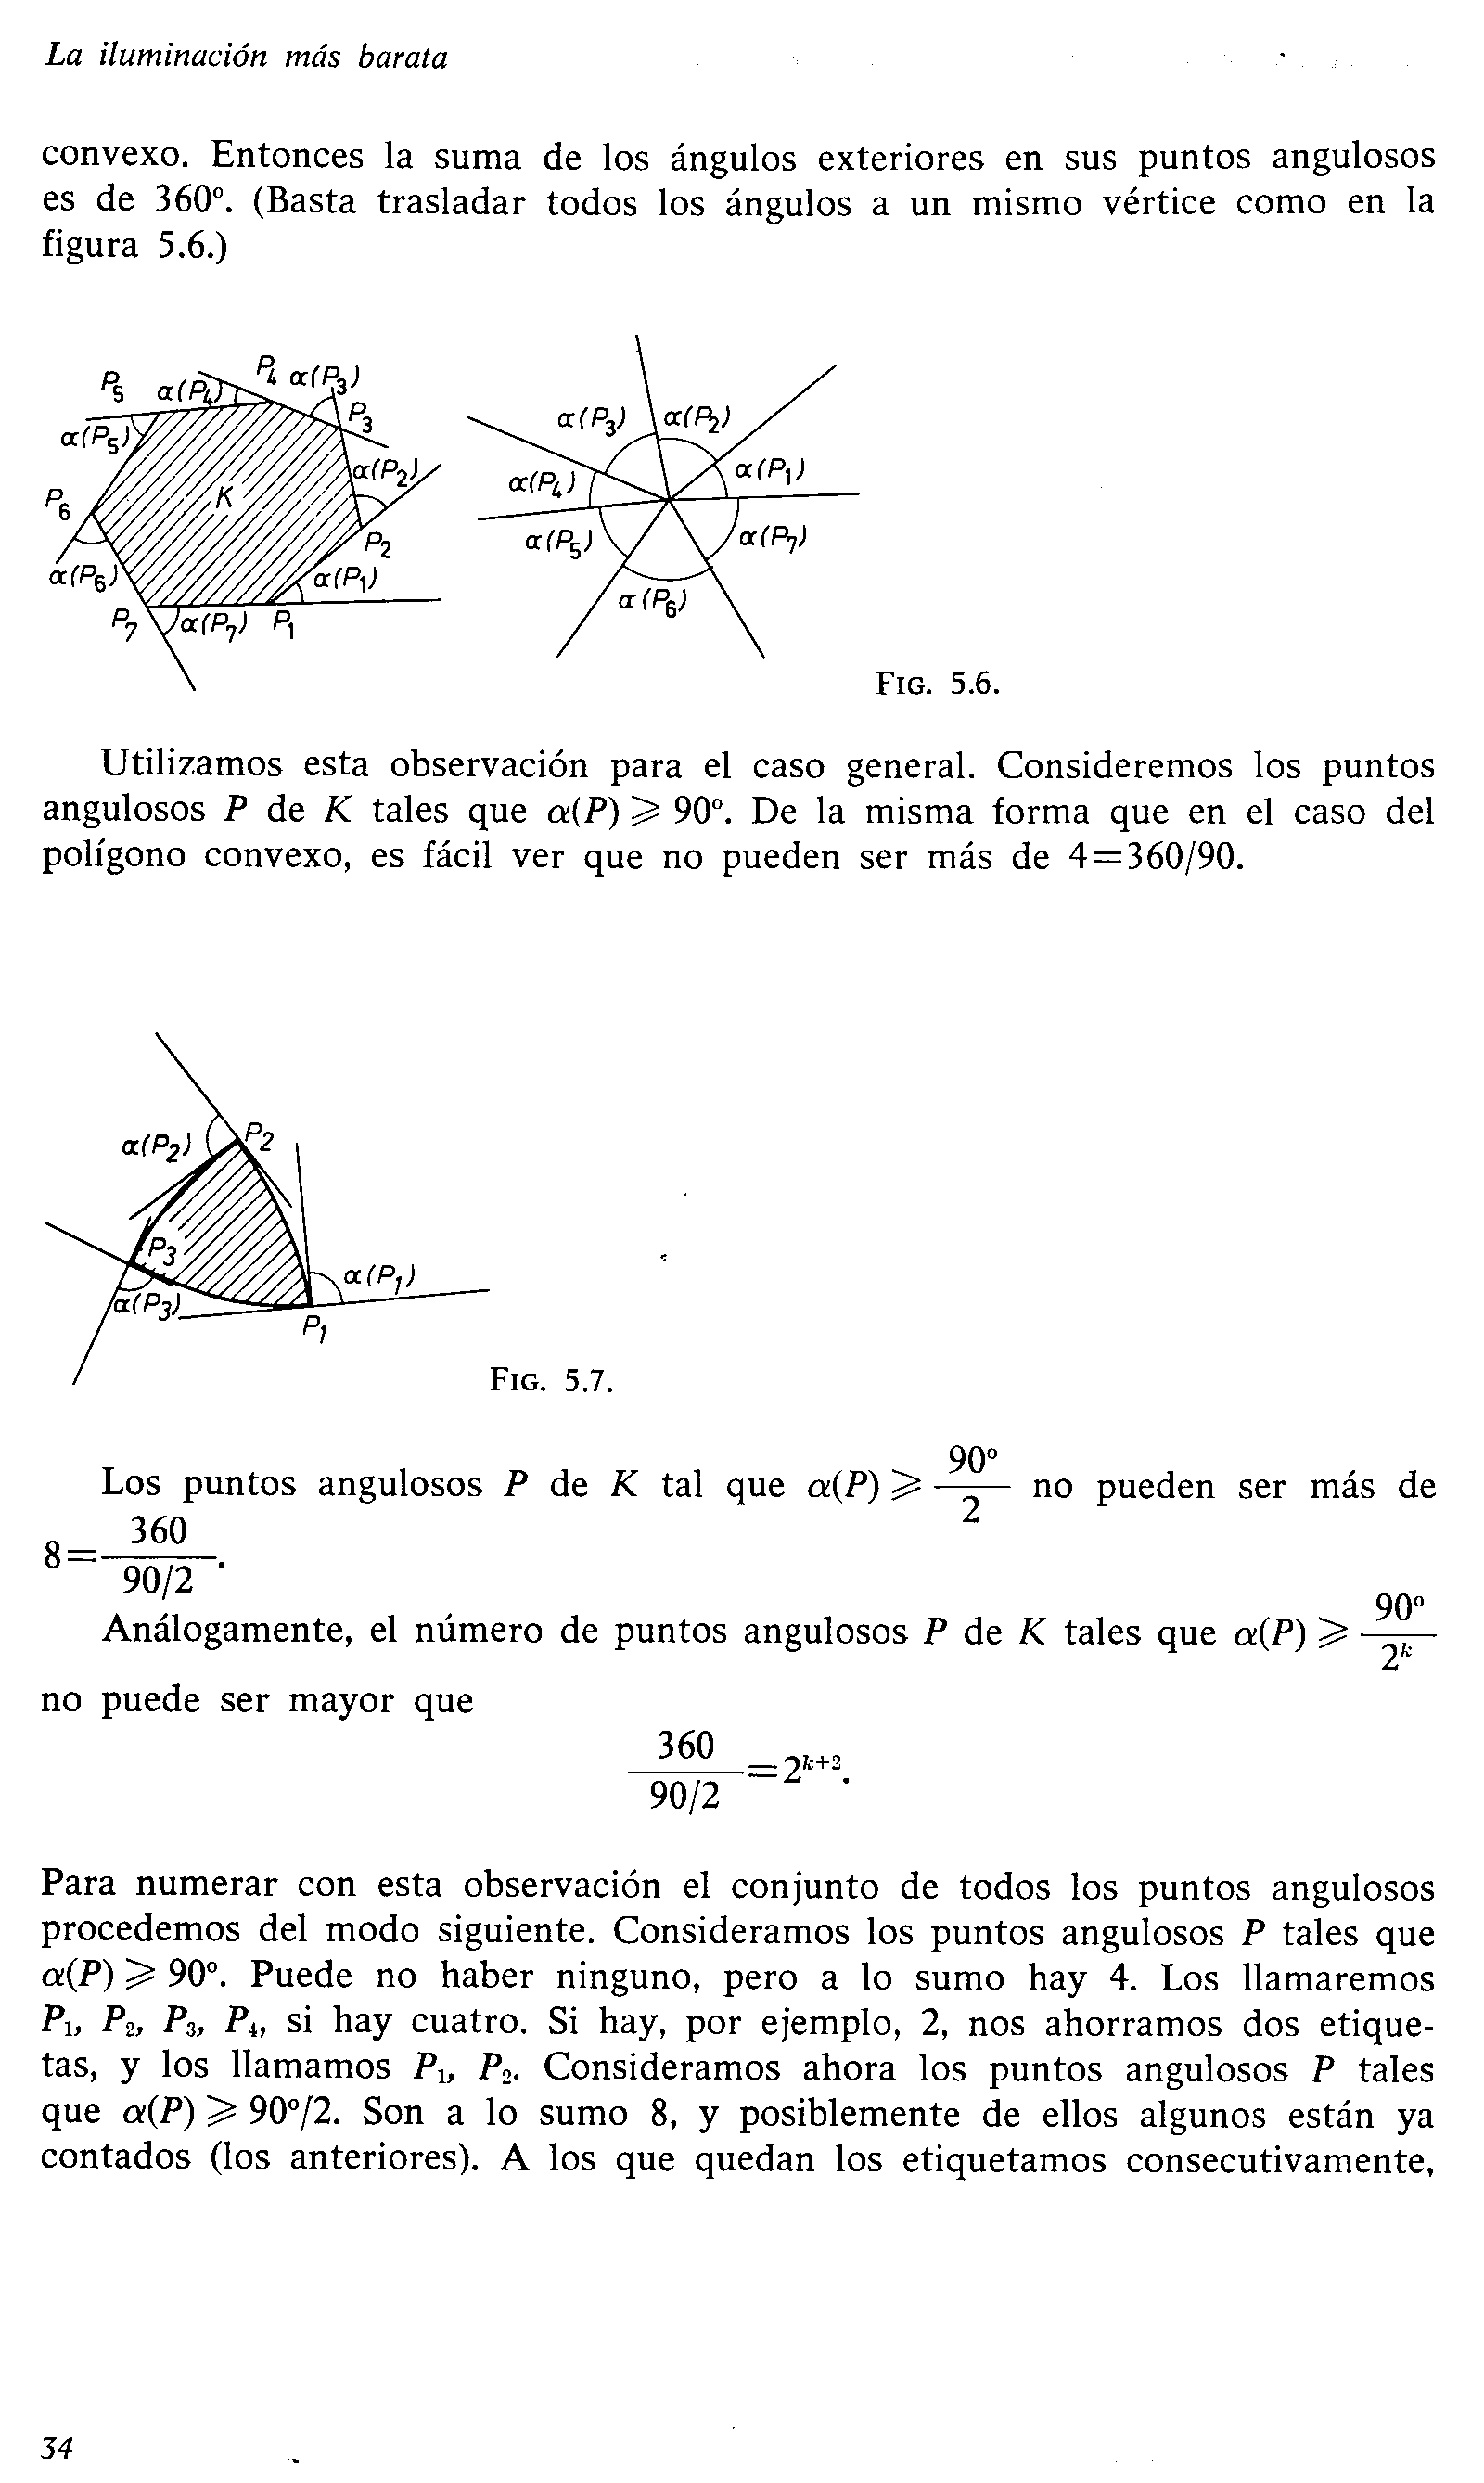 Graphics (p.8-1)